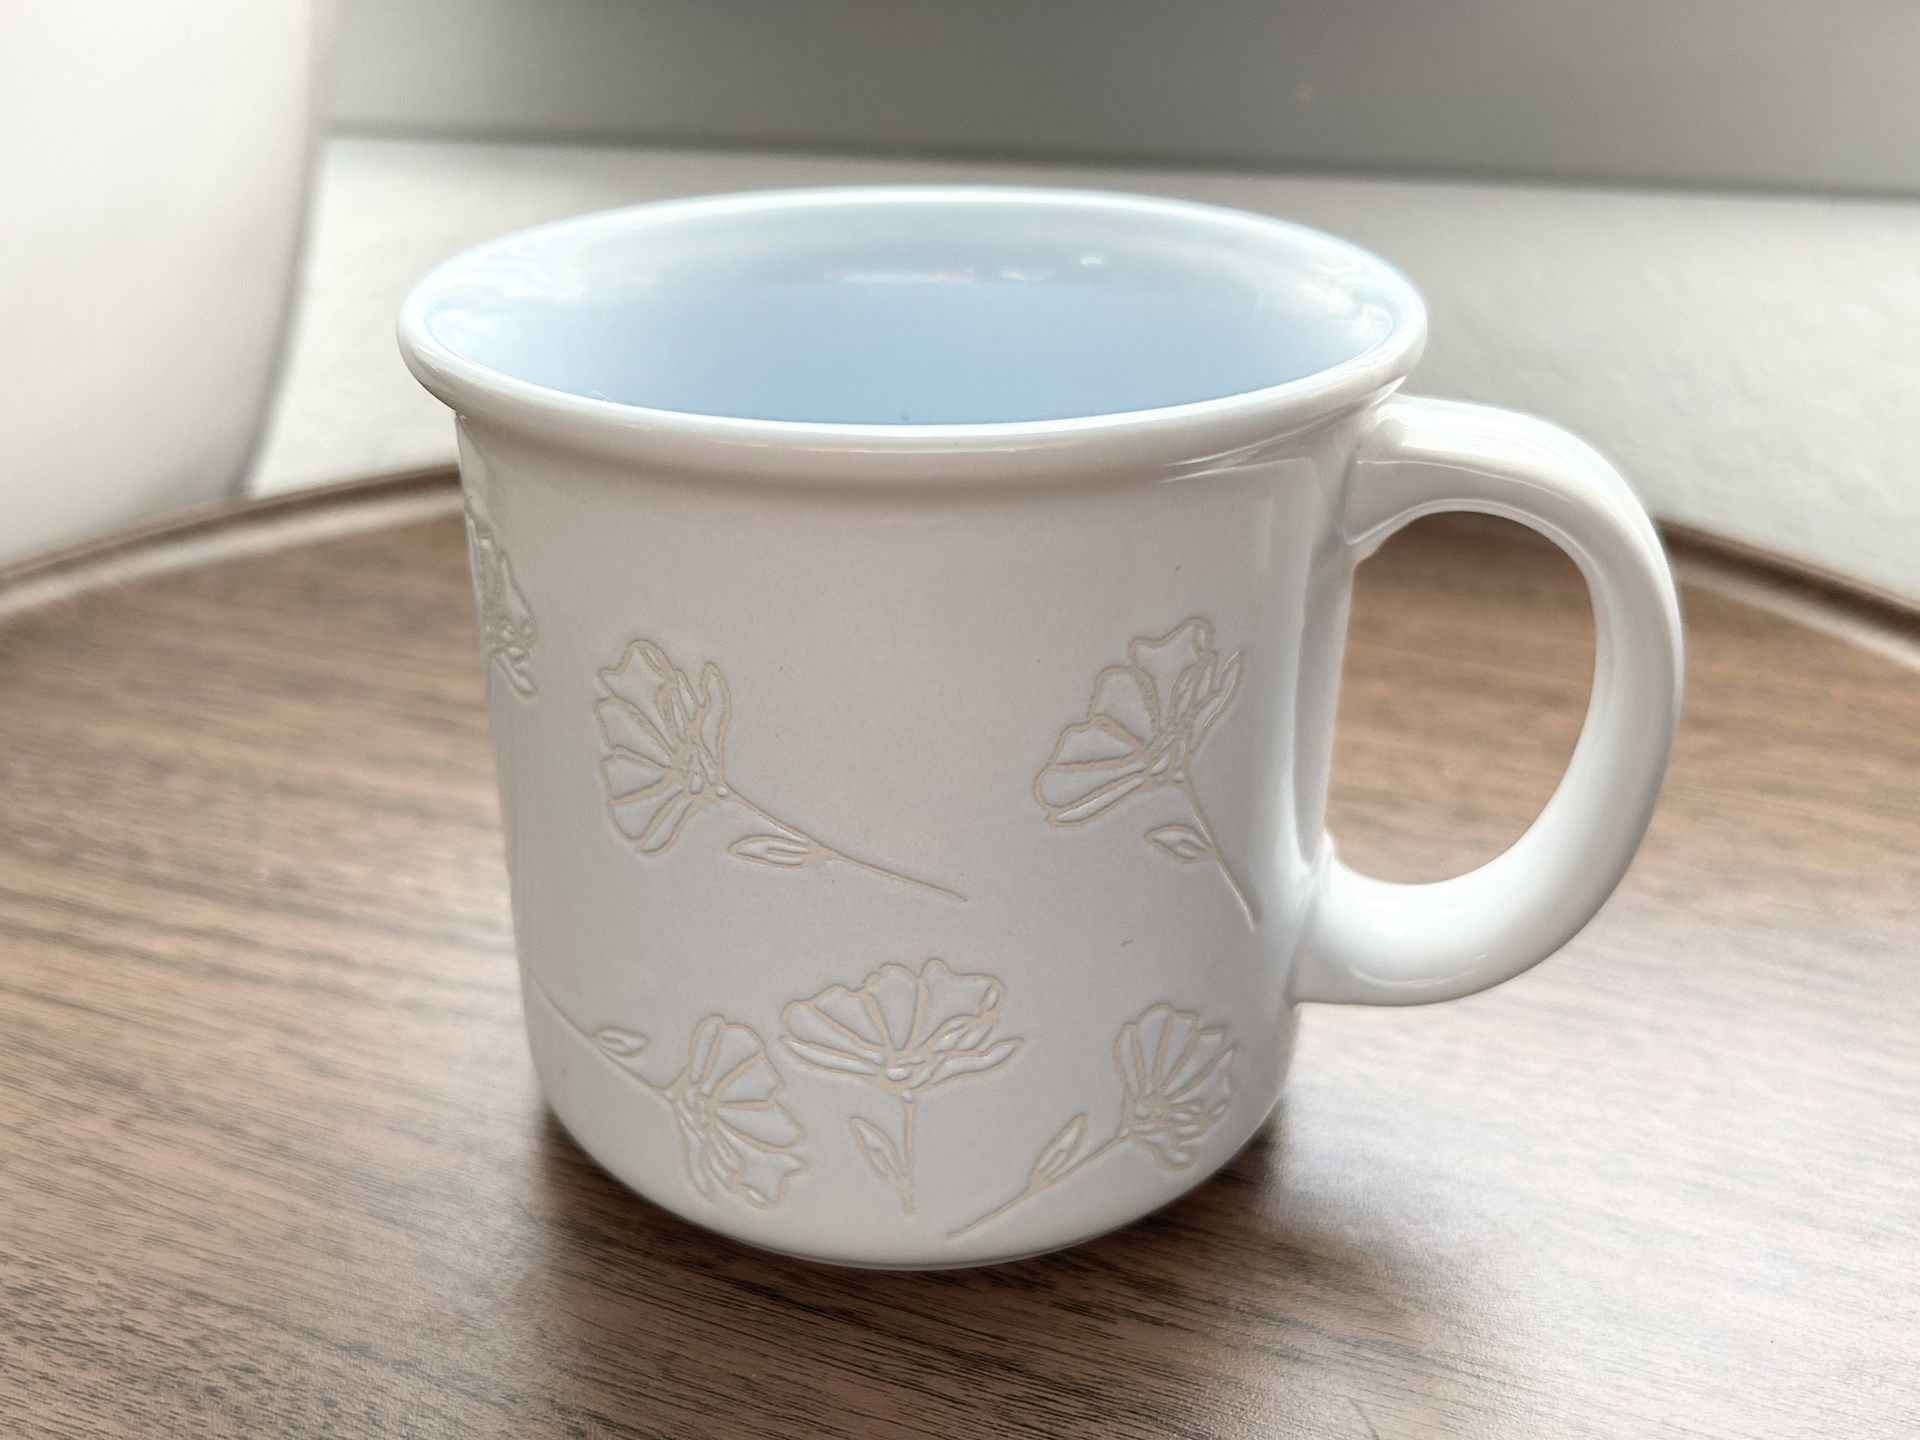 $10 for Blue Floral Coffee Mug